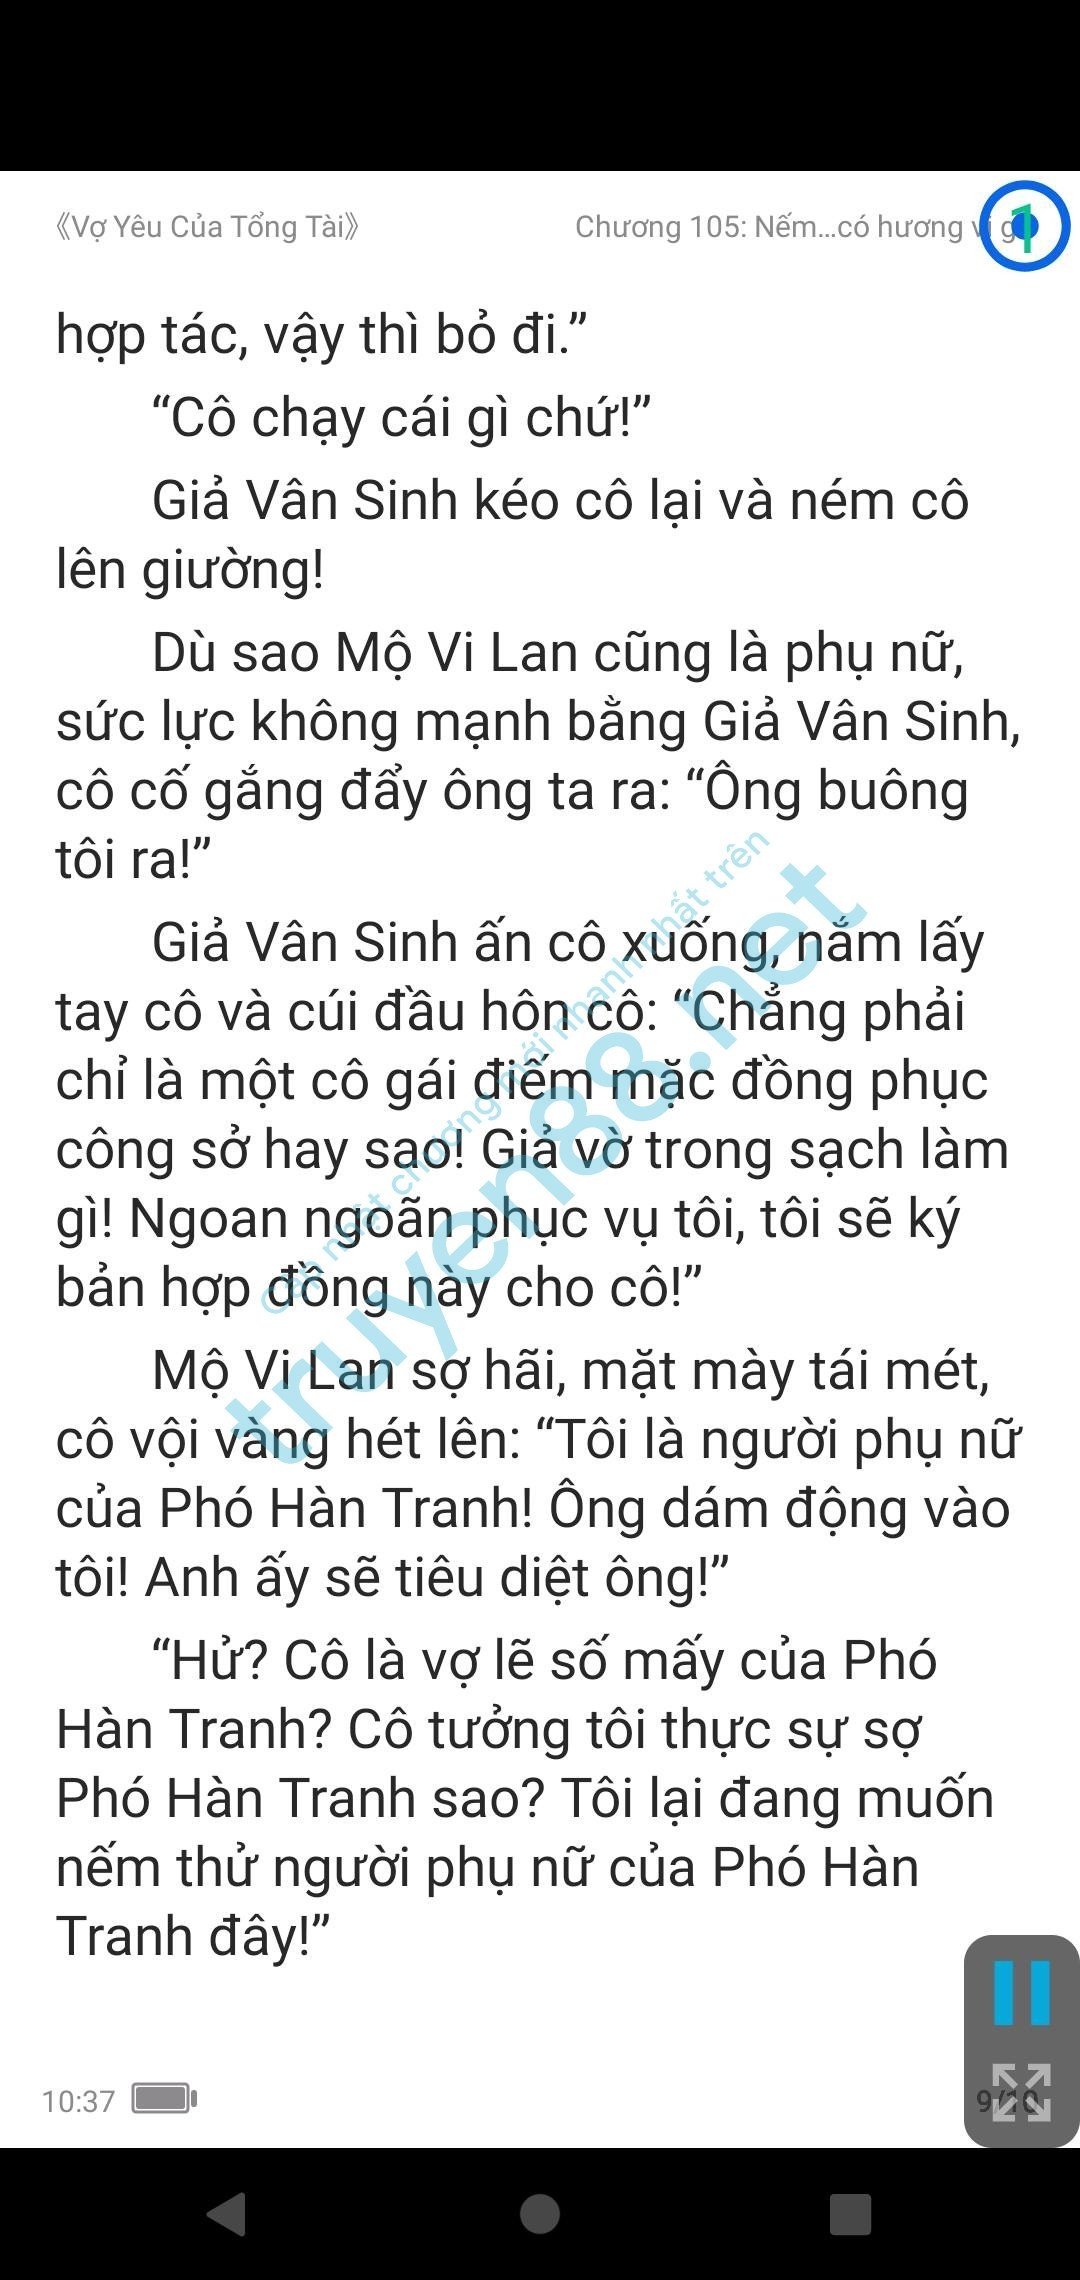 vo-yeu-cua-tong-tai-mo-vi-lan--pho-han-tranh-105-1